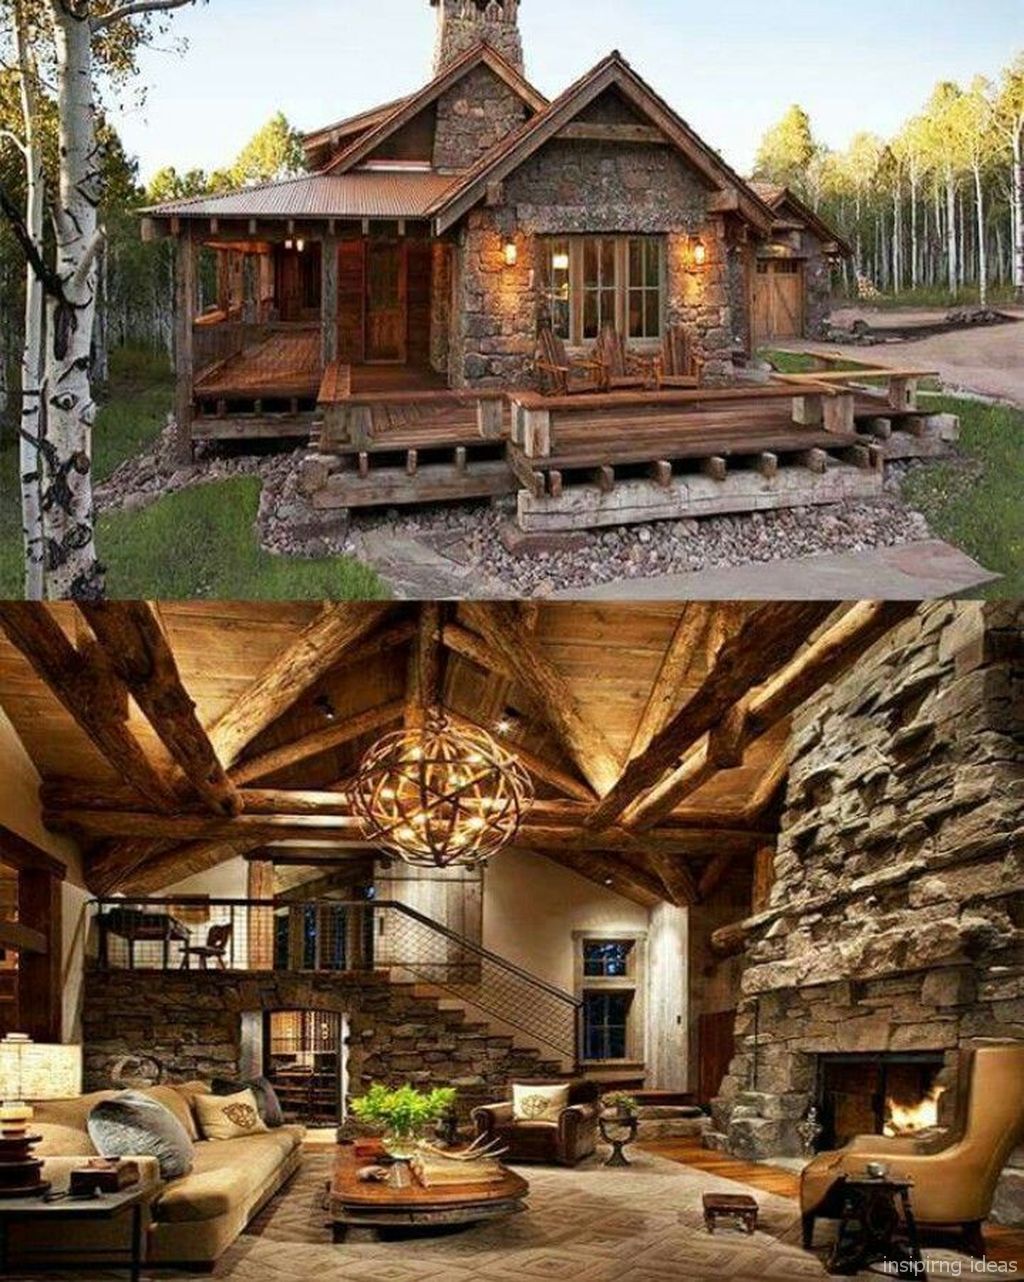 Design Of Rustic Log Cabins